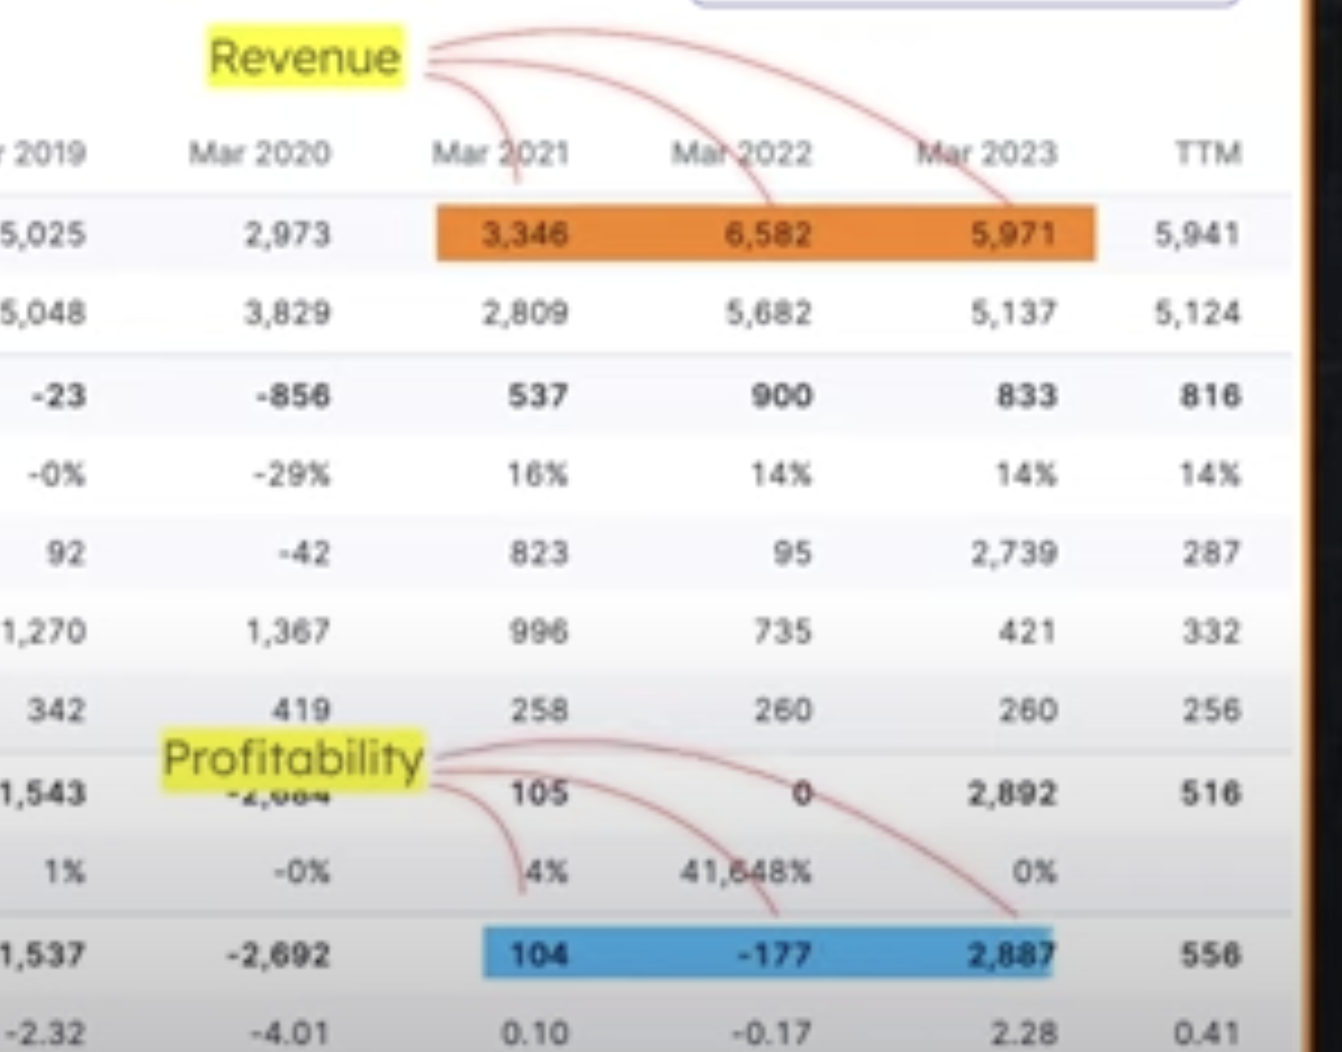 Suzlon's revenue and profitability since 2021